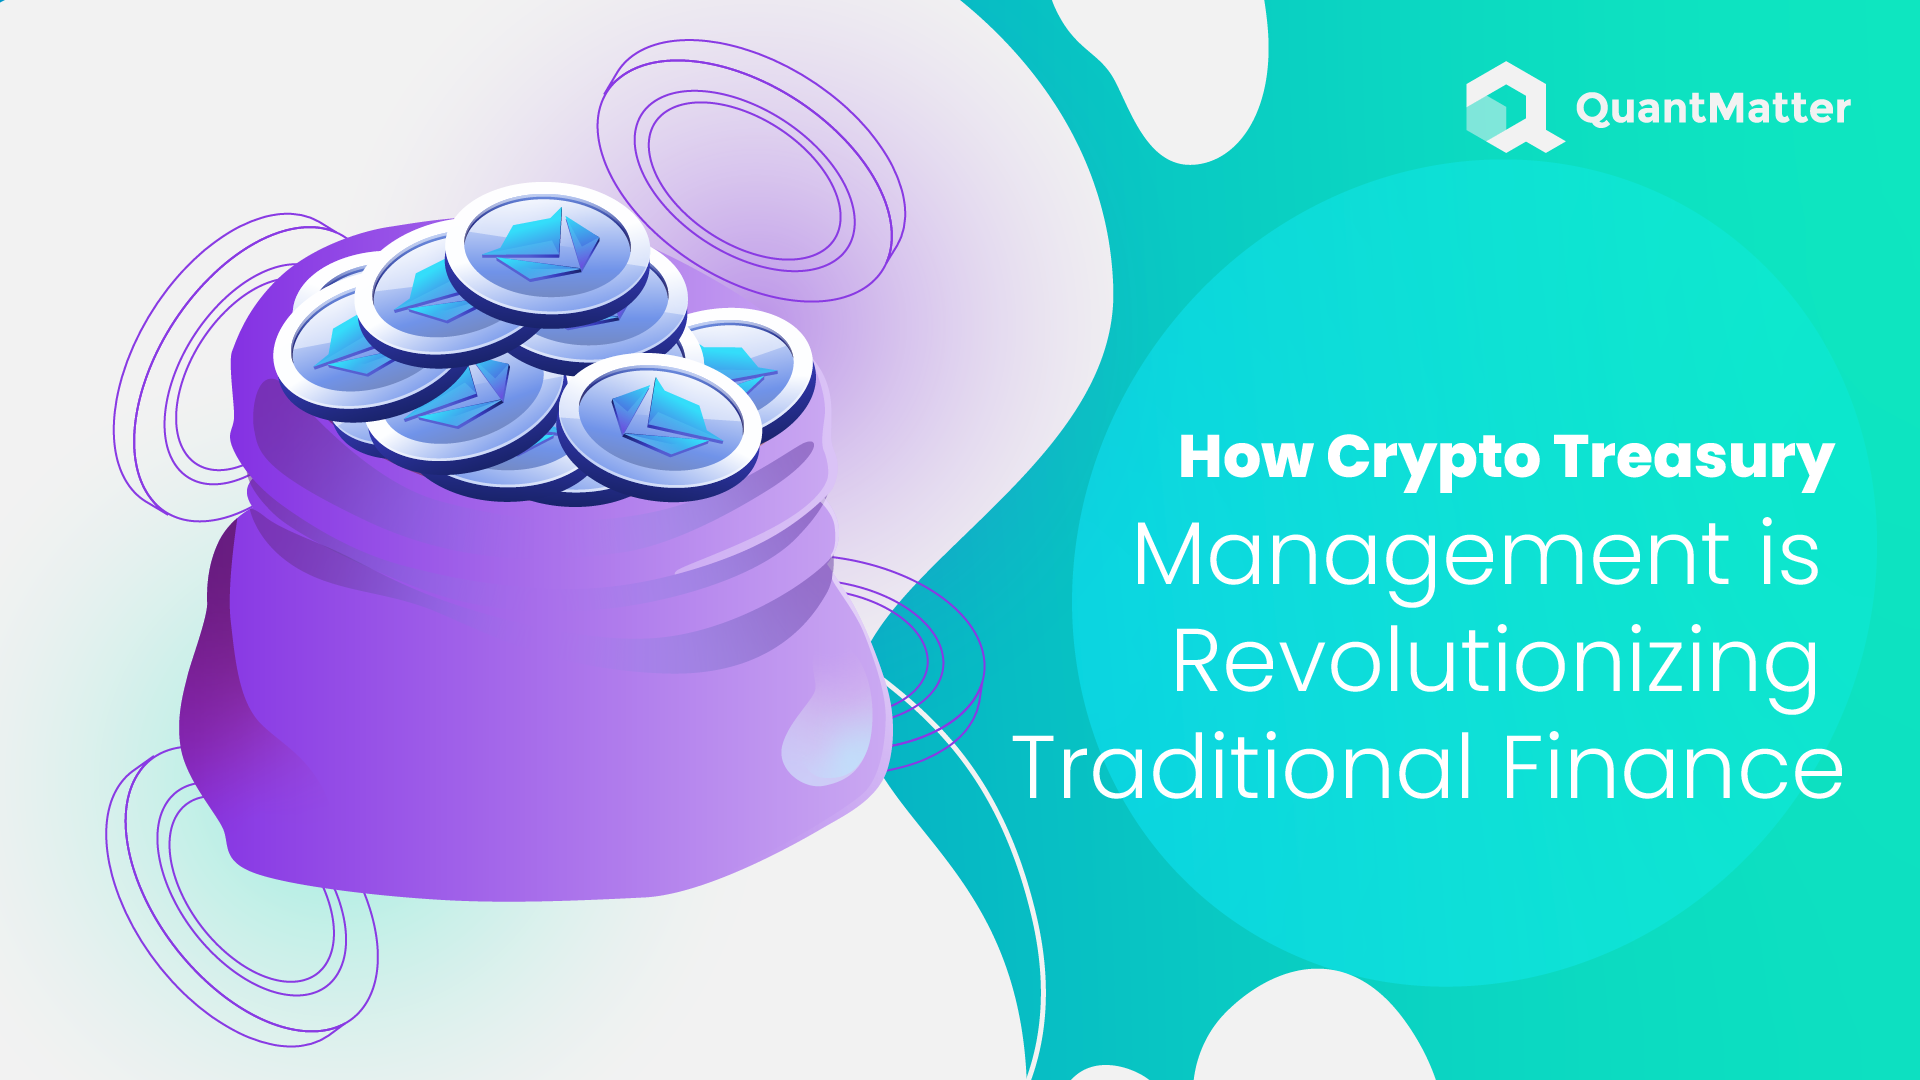 How Crypto Treasury Management is Revolutionizing Traditional Finance